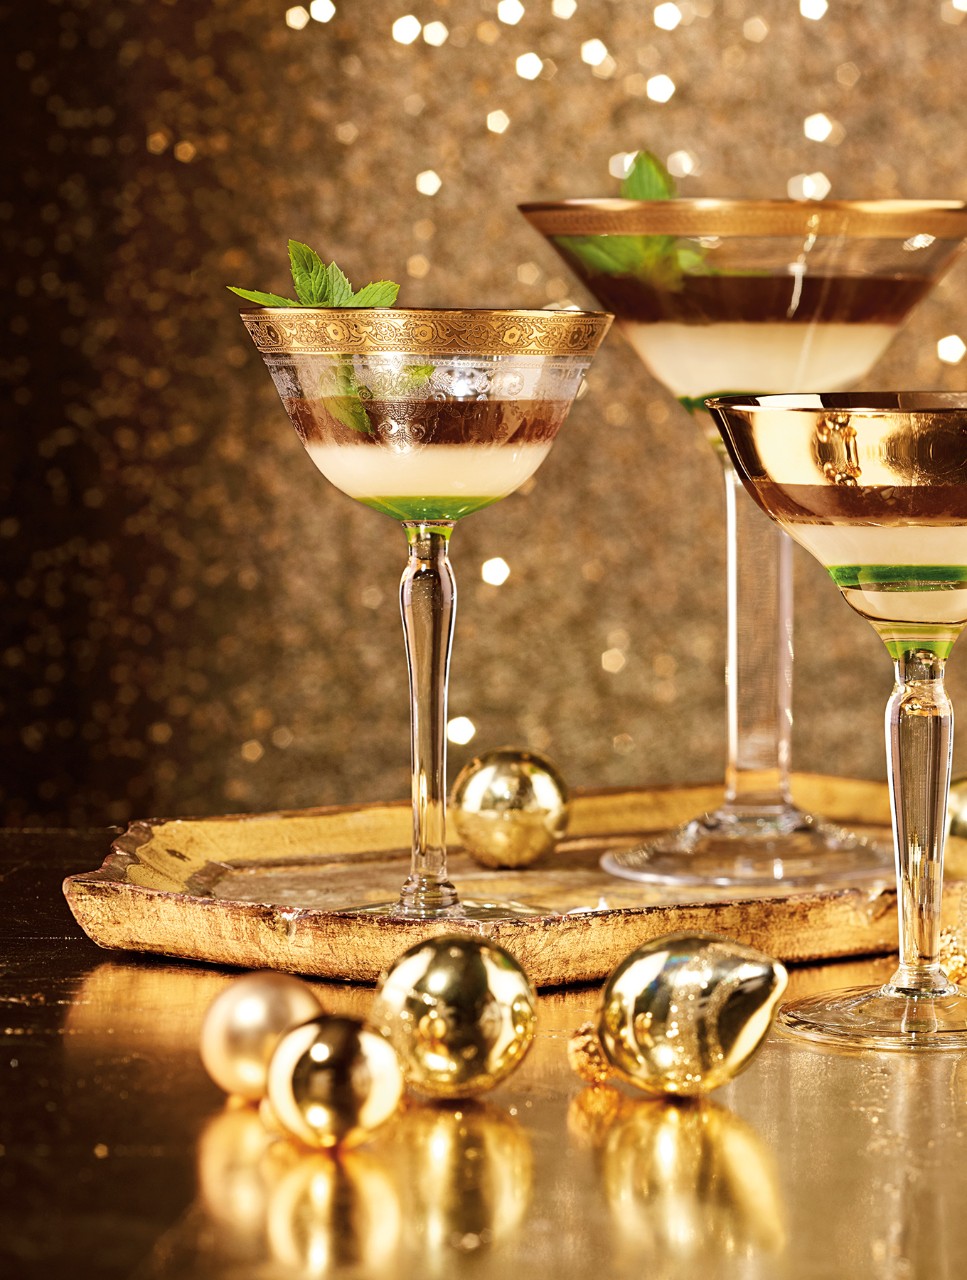 The Bollywood Martini